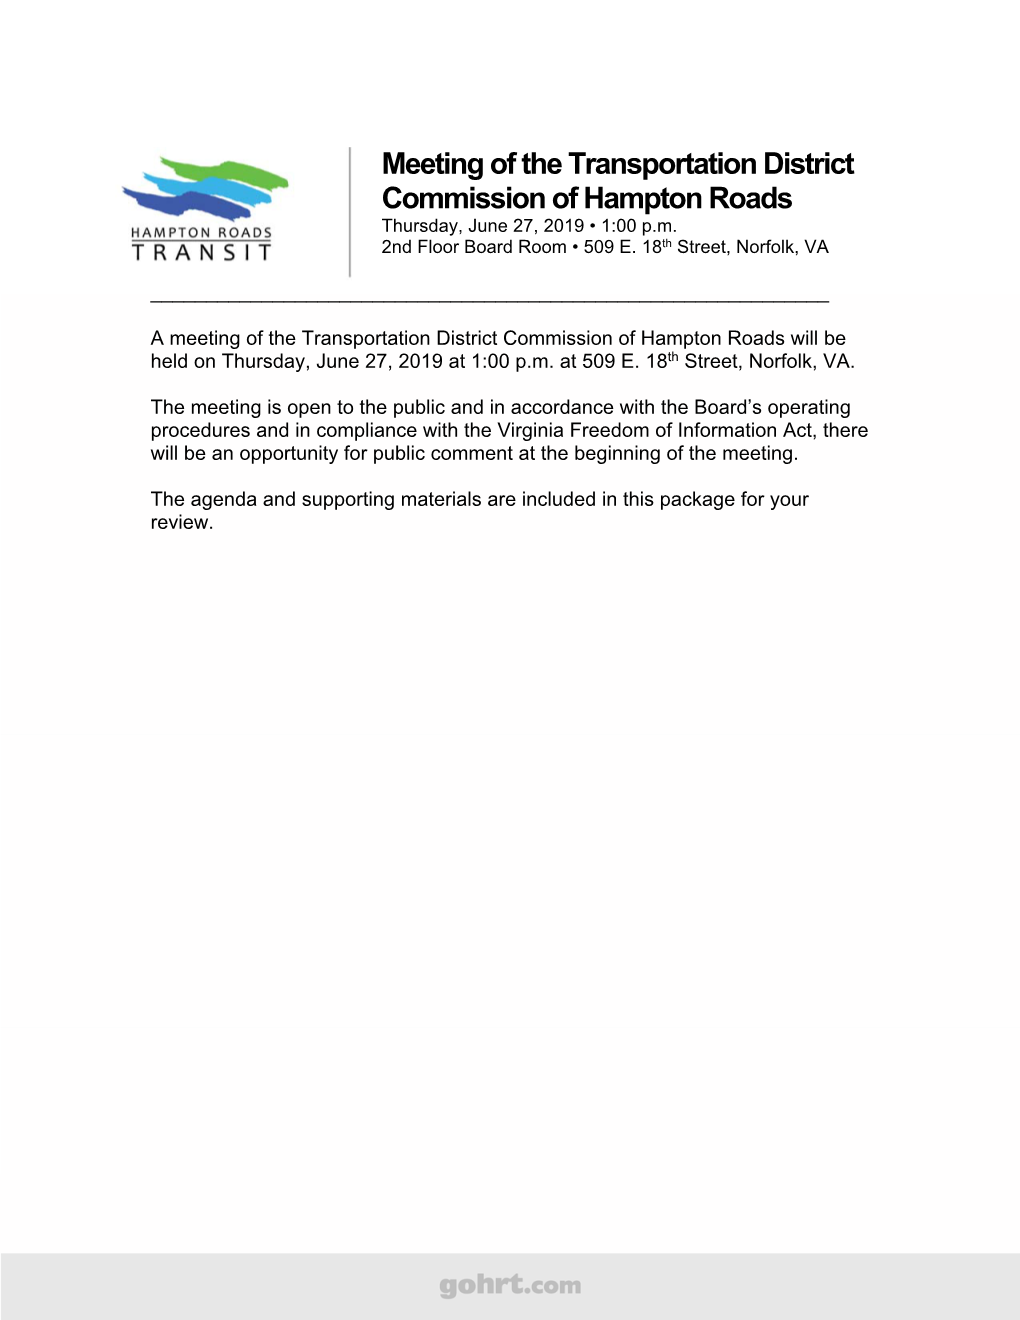 Meeting of the Transportation District Commission of Hampton Roads Thursday, June 27, 2019 • 1:00 P.M